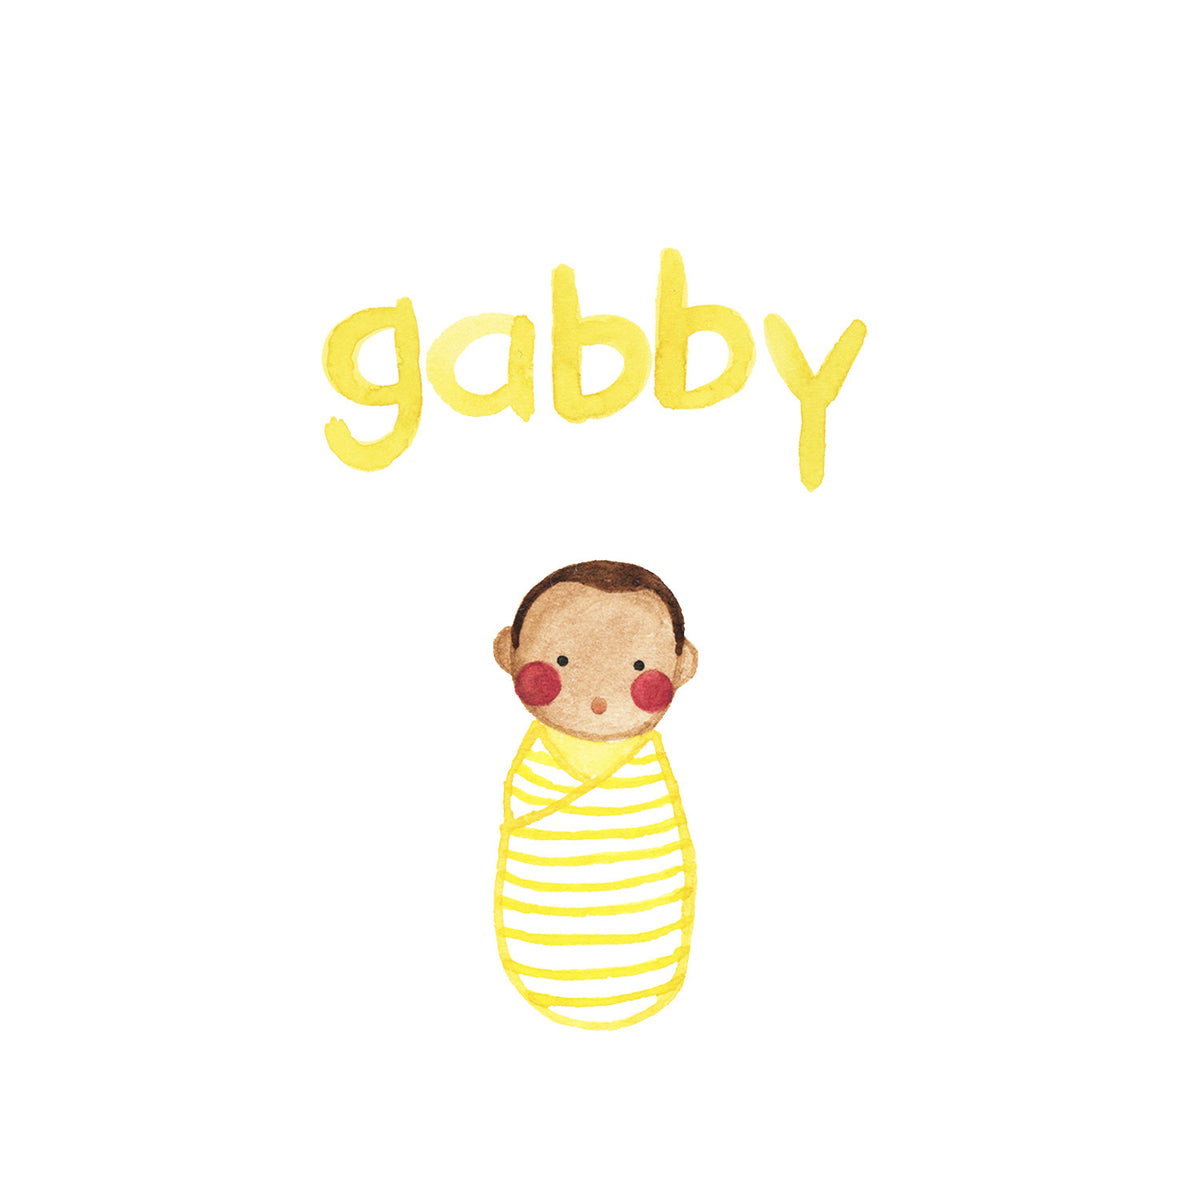 Custom Baby Portrait + Announcement